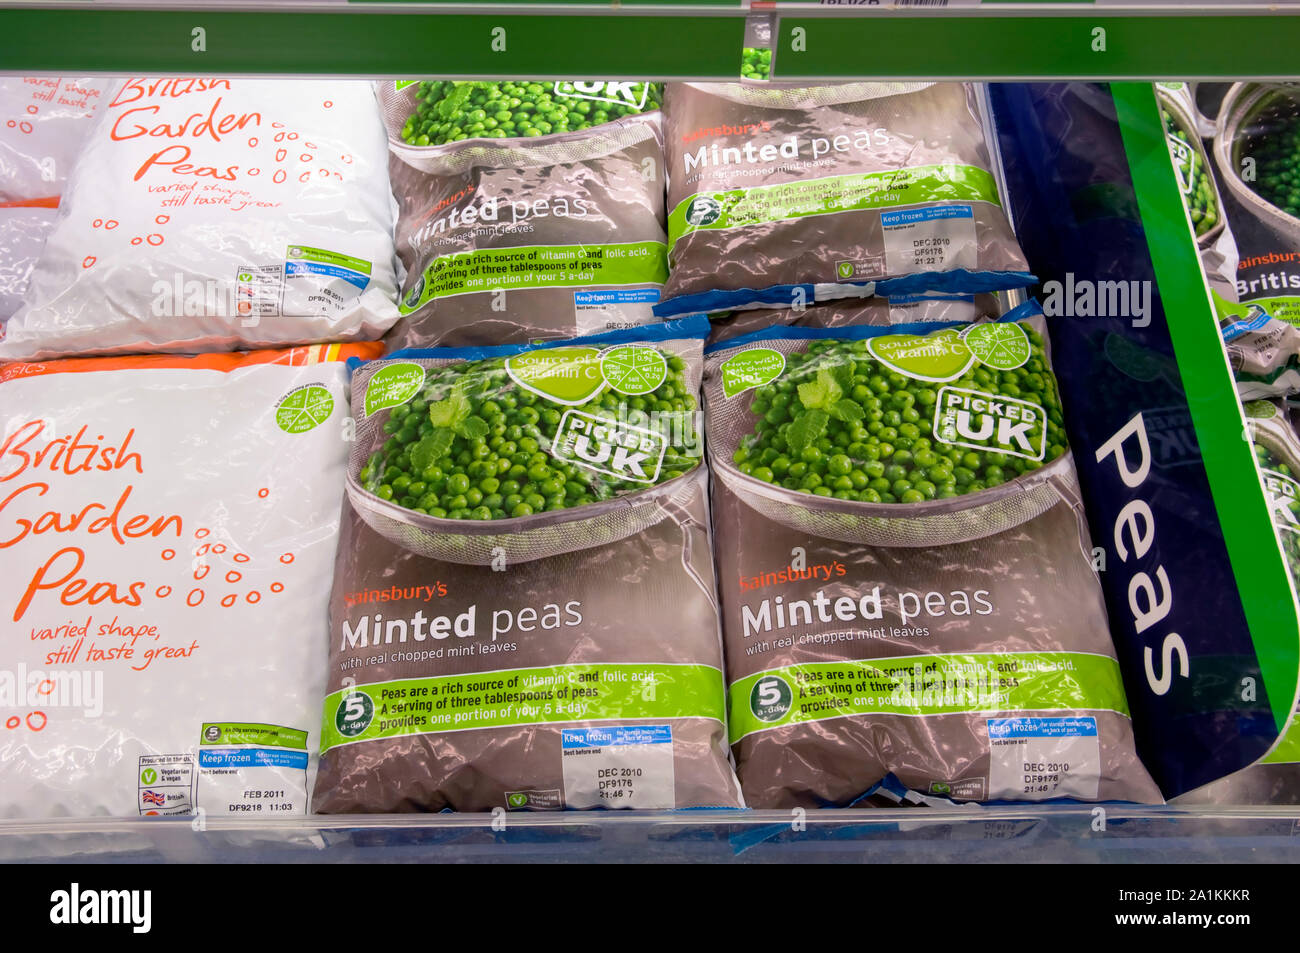 Frozen peas for sale in Sainsbury's supermarket. Stock Photo